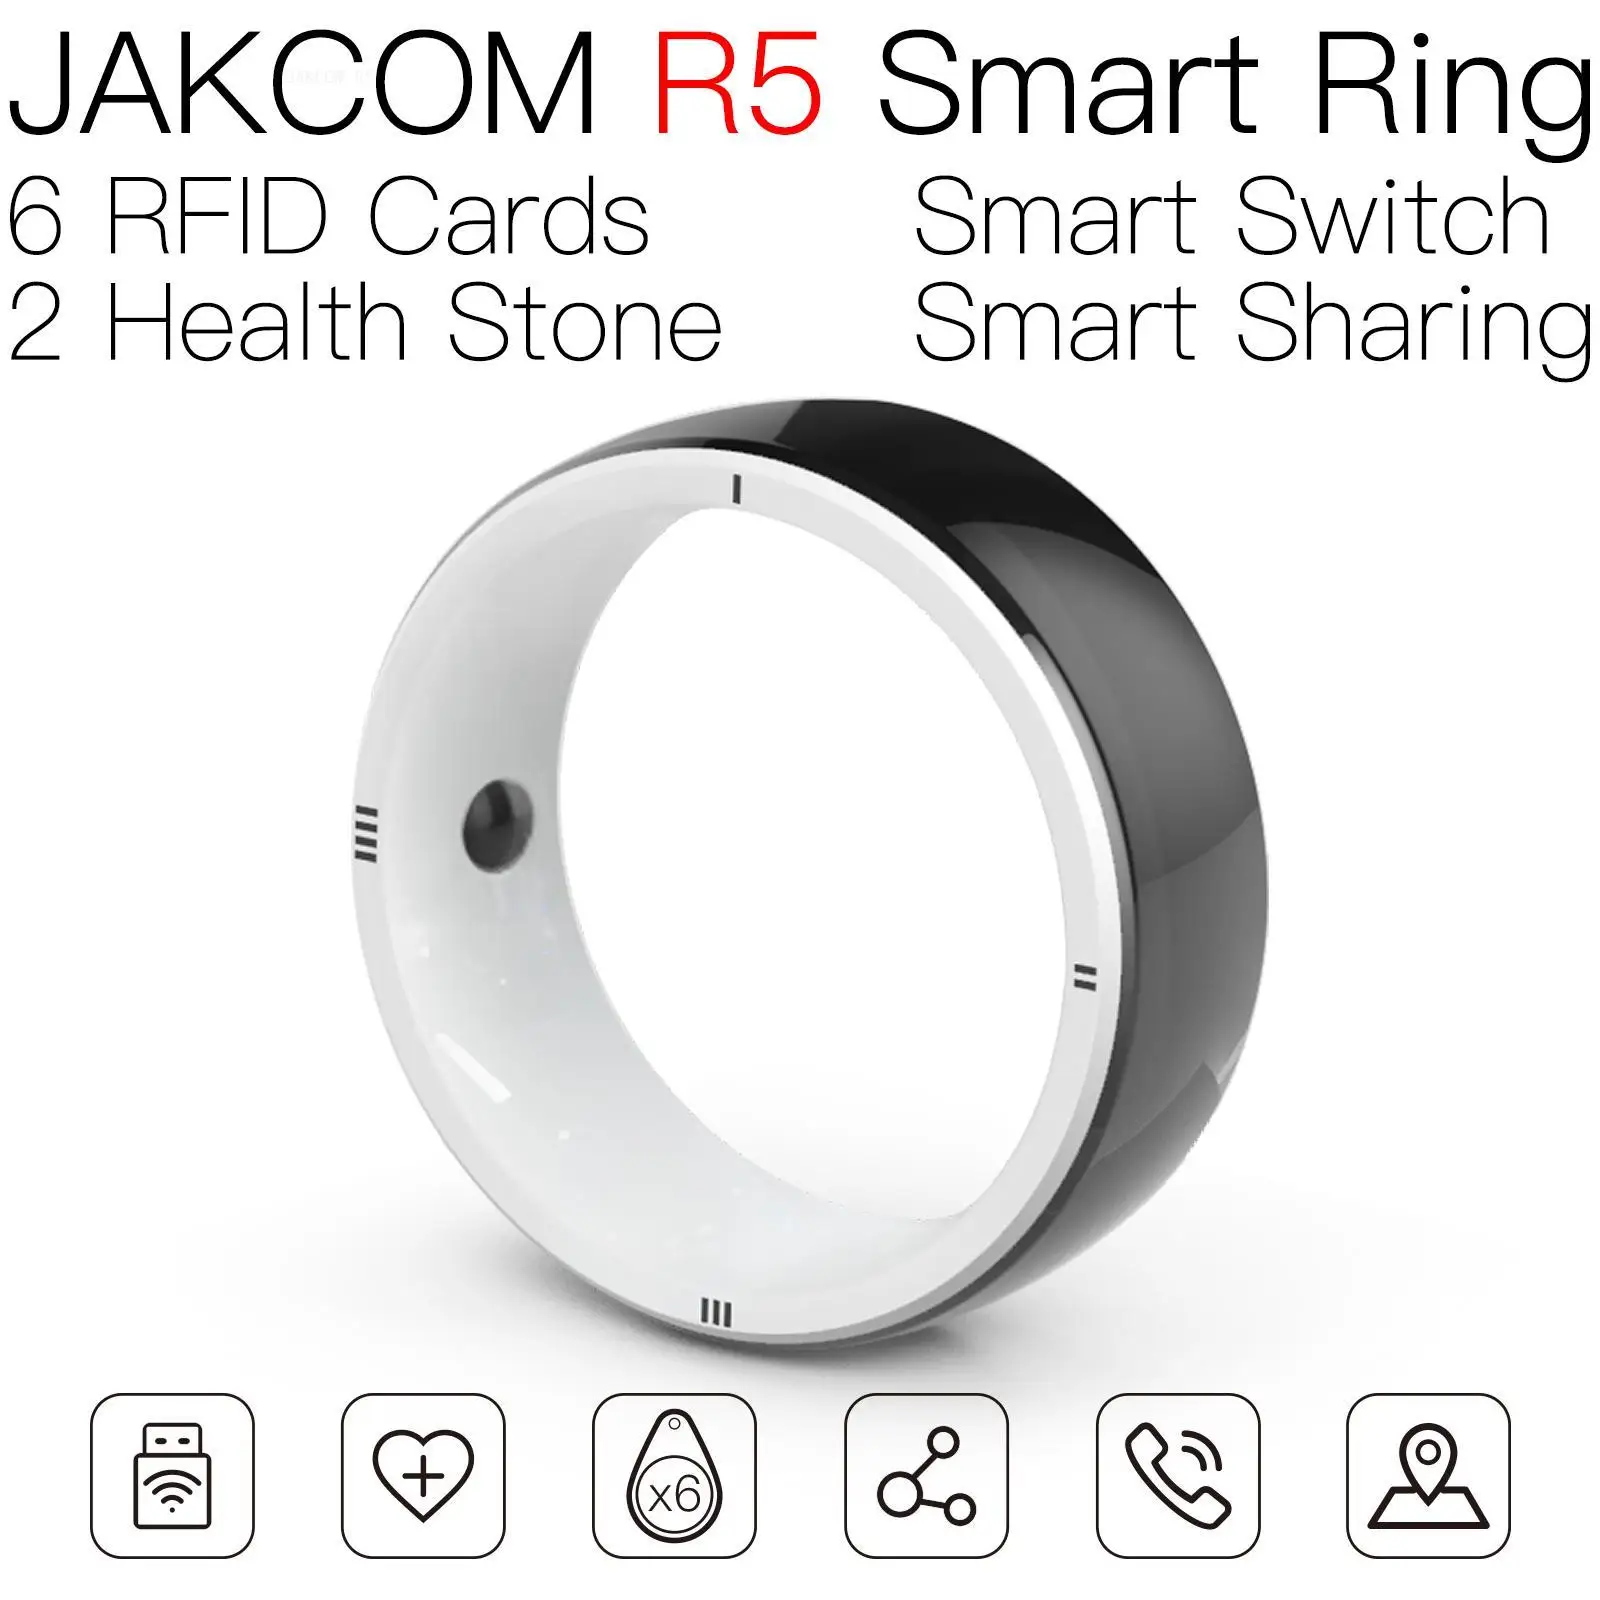 

JAKCOM R5 Smart Ring better than rewritable 125khz tag asset uhf management nfc metal sticker uid changeable smart card reader